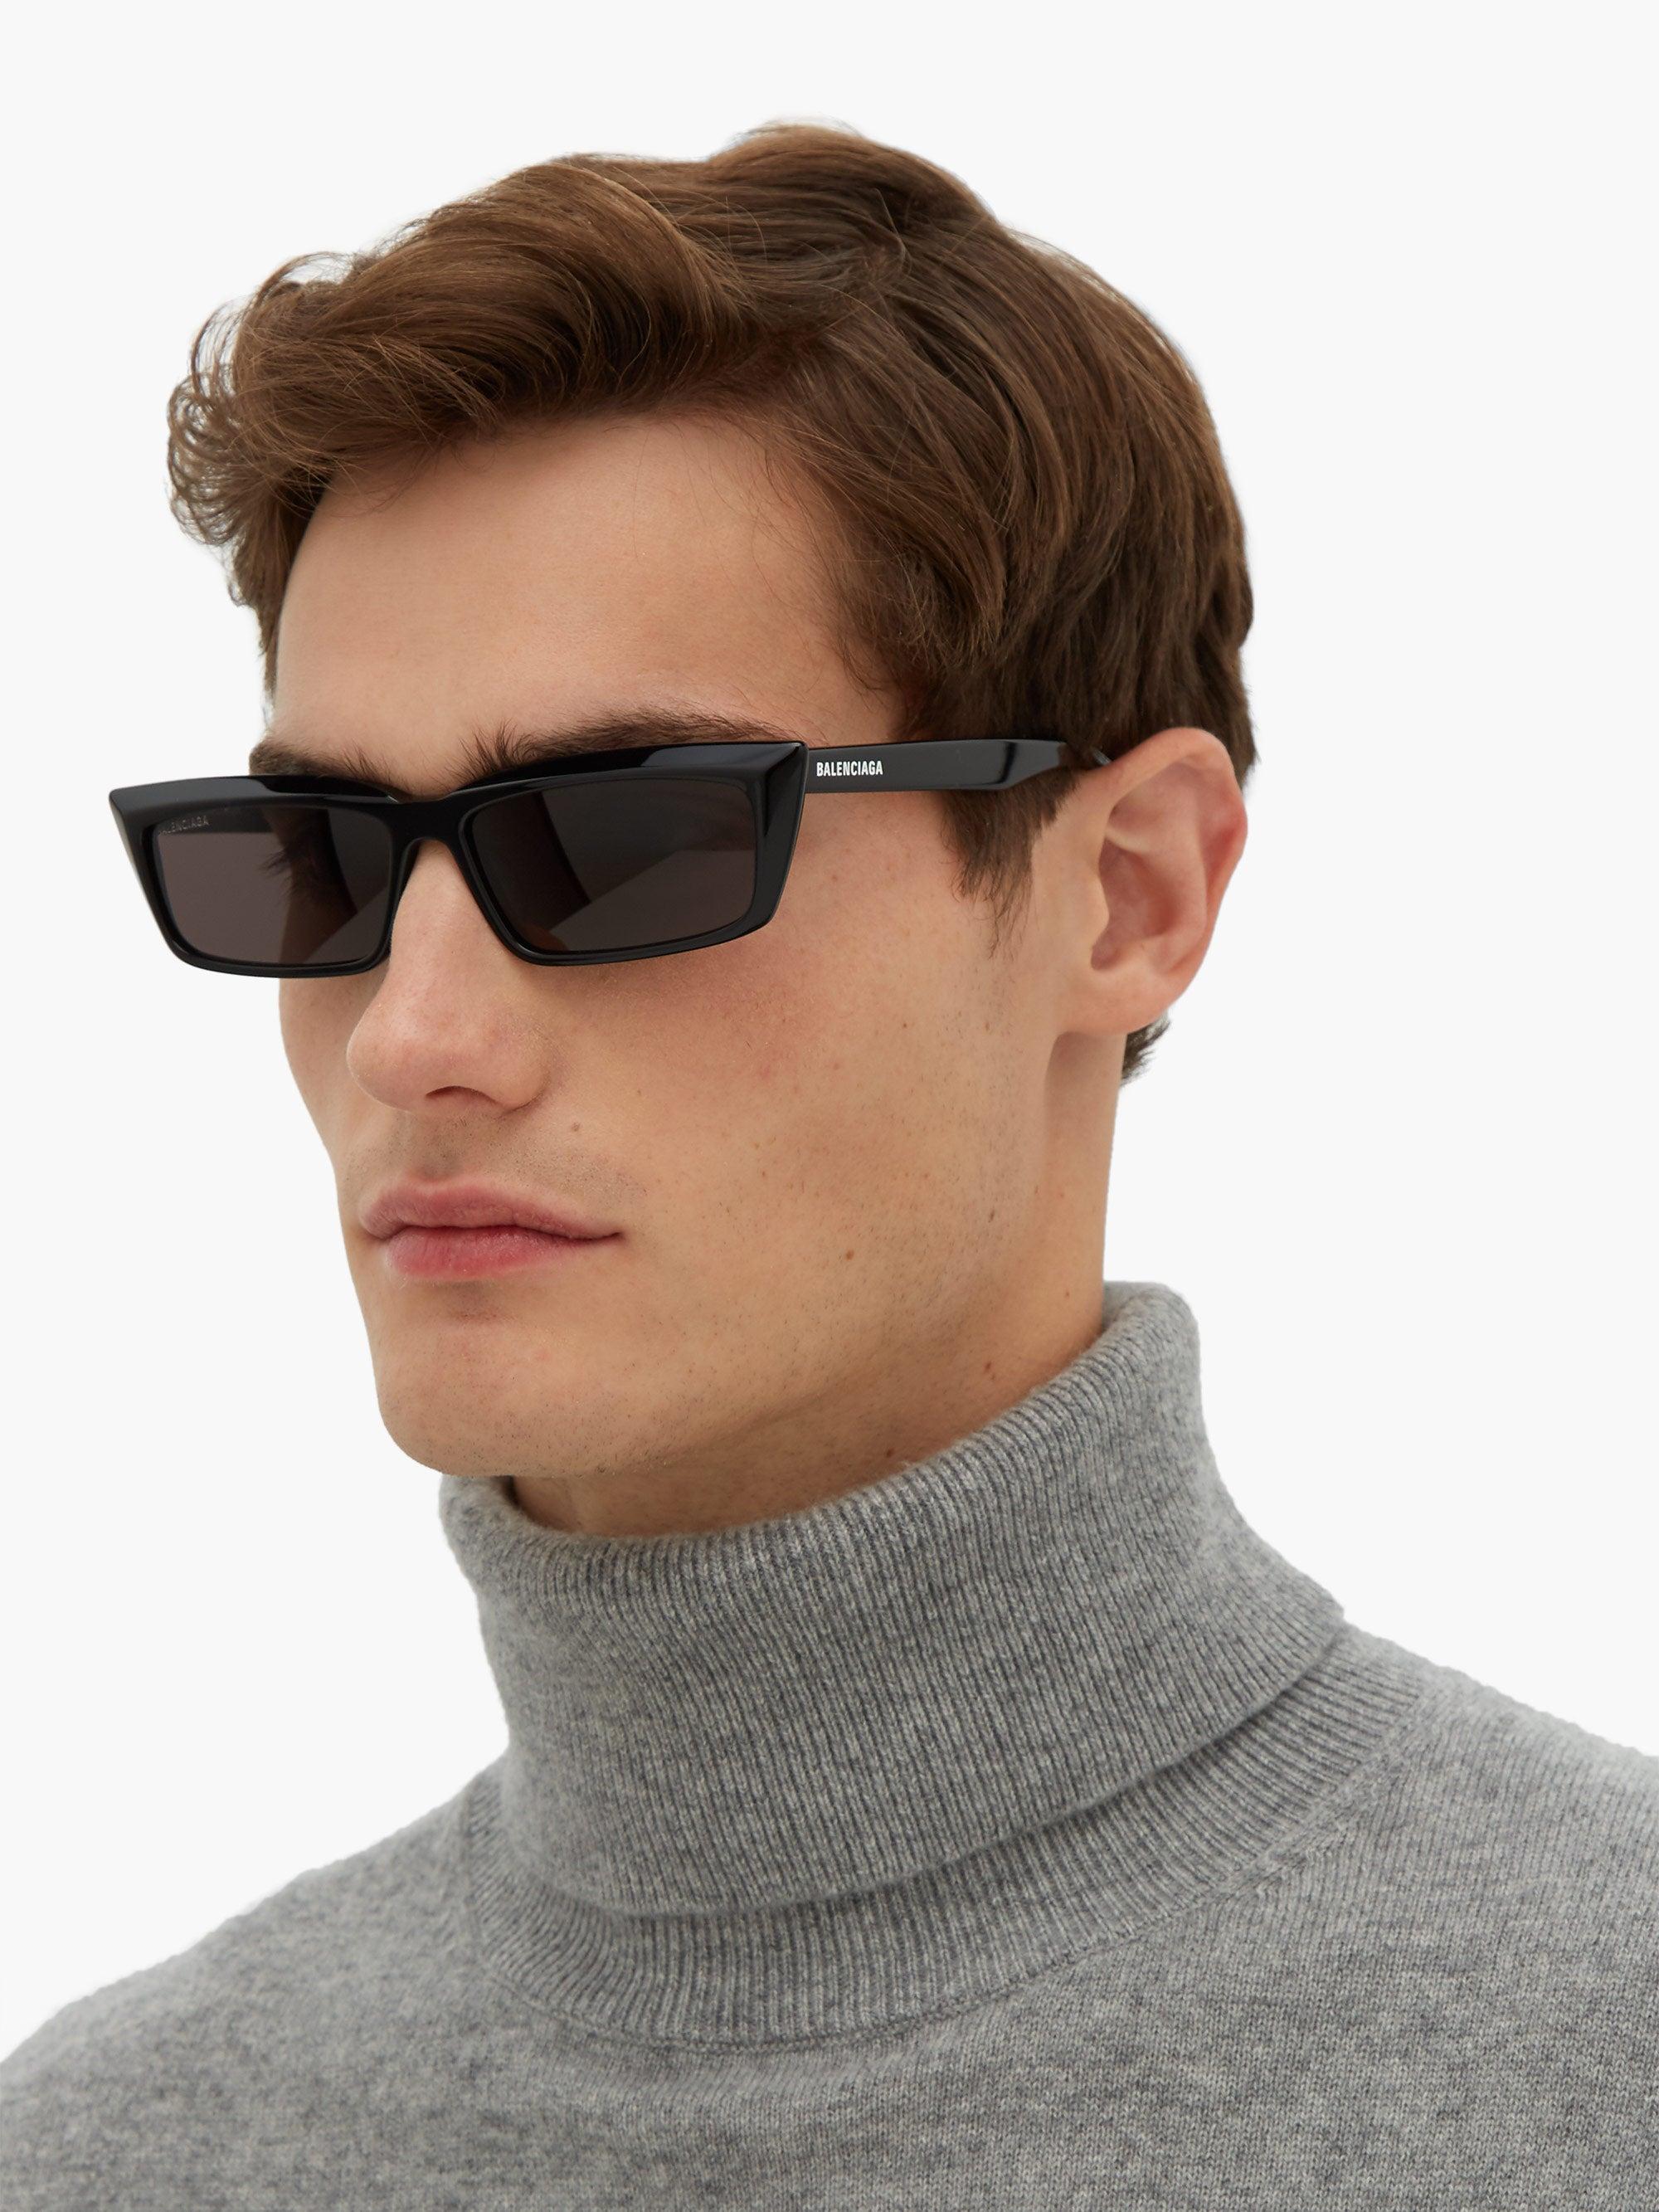 Balenciaga Sunglasses for Men and Women Flannels